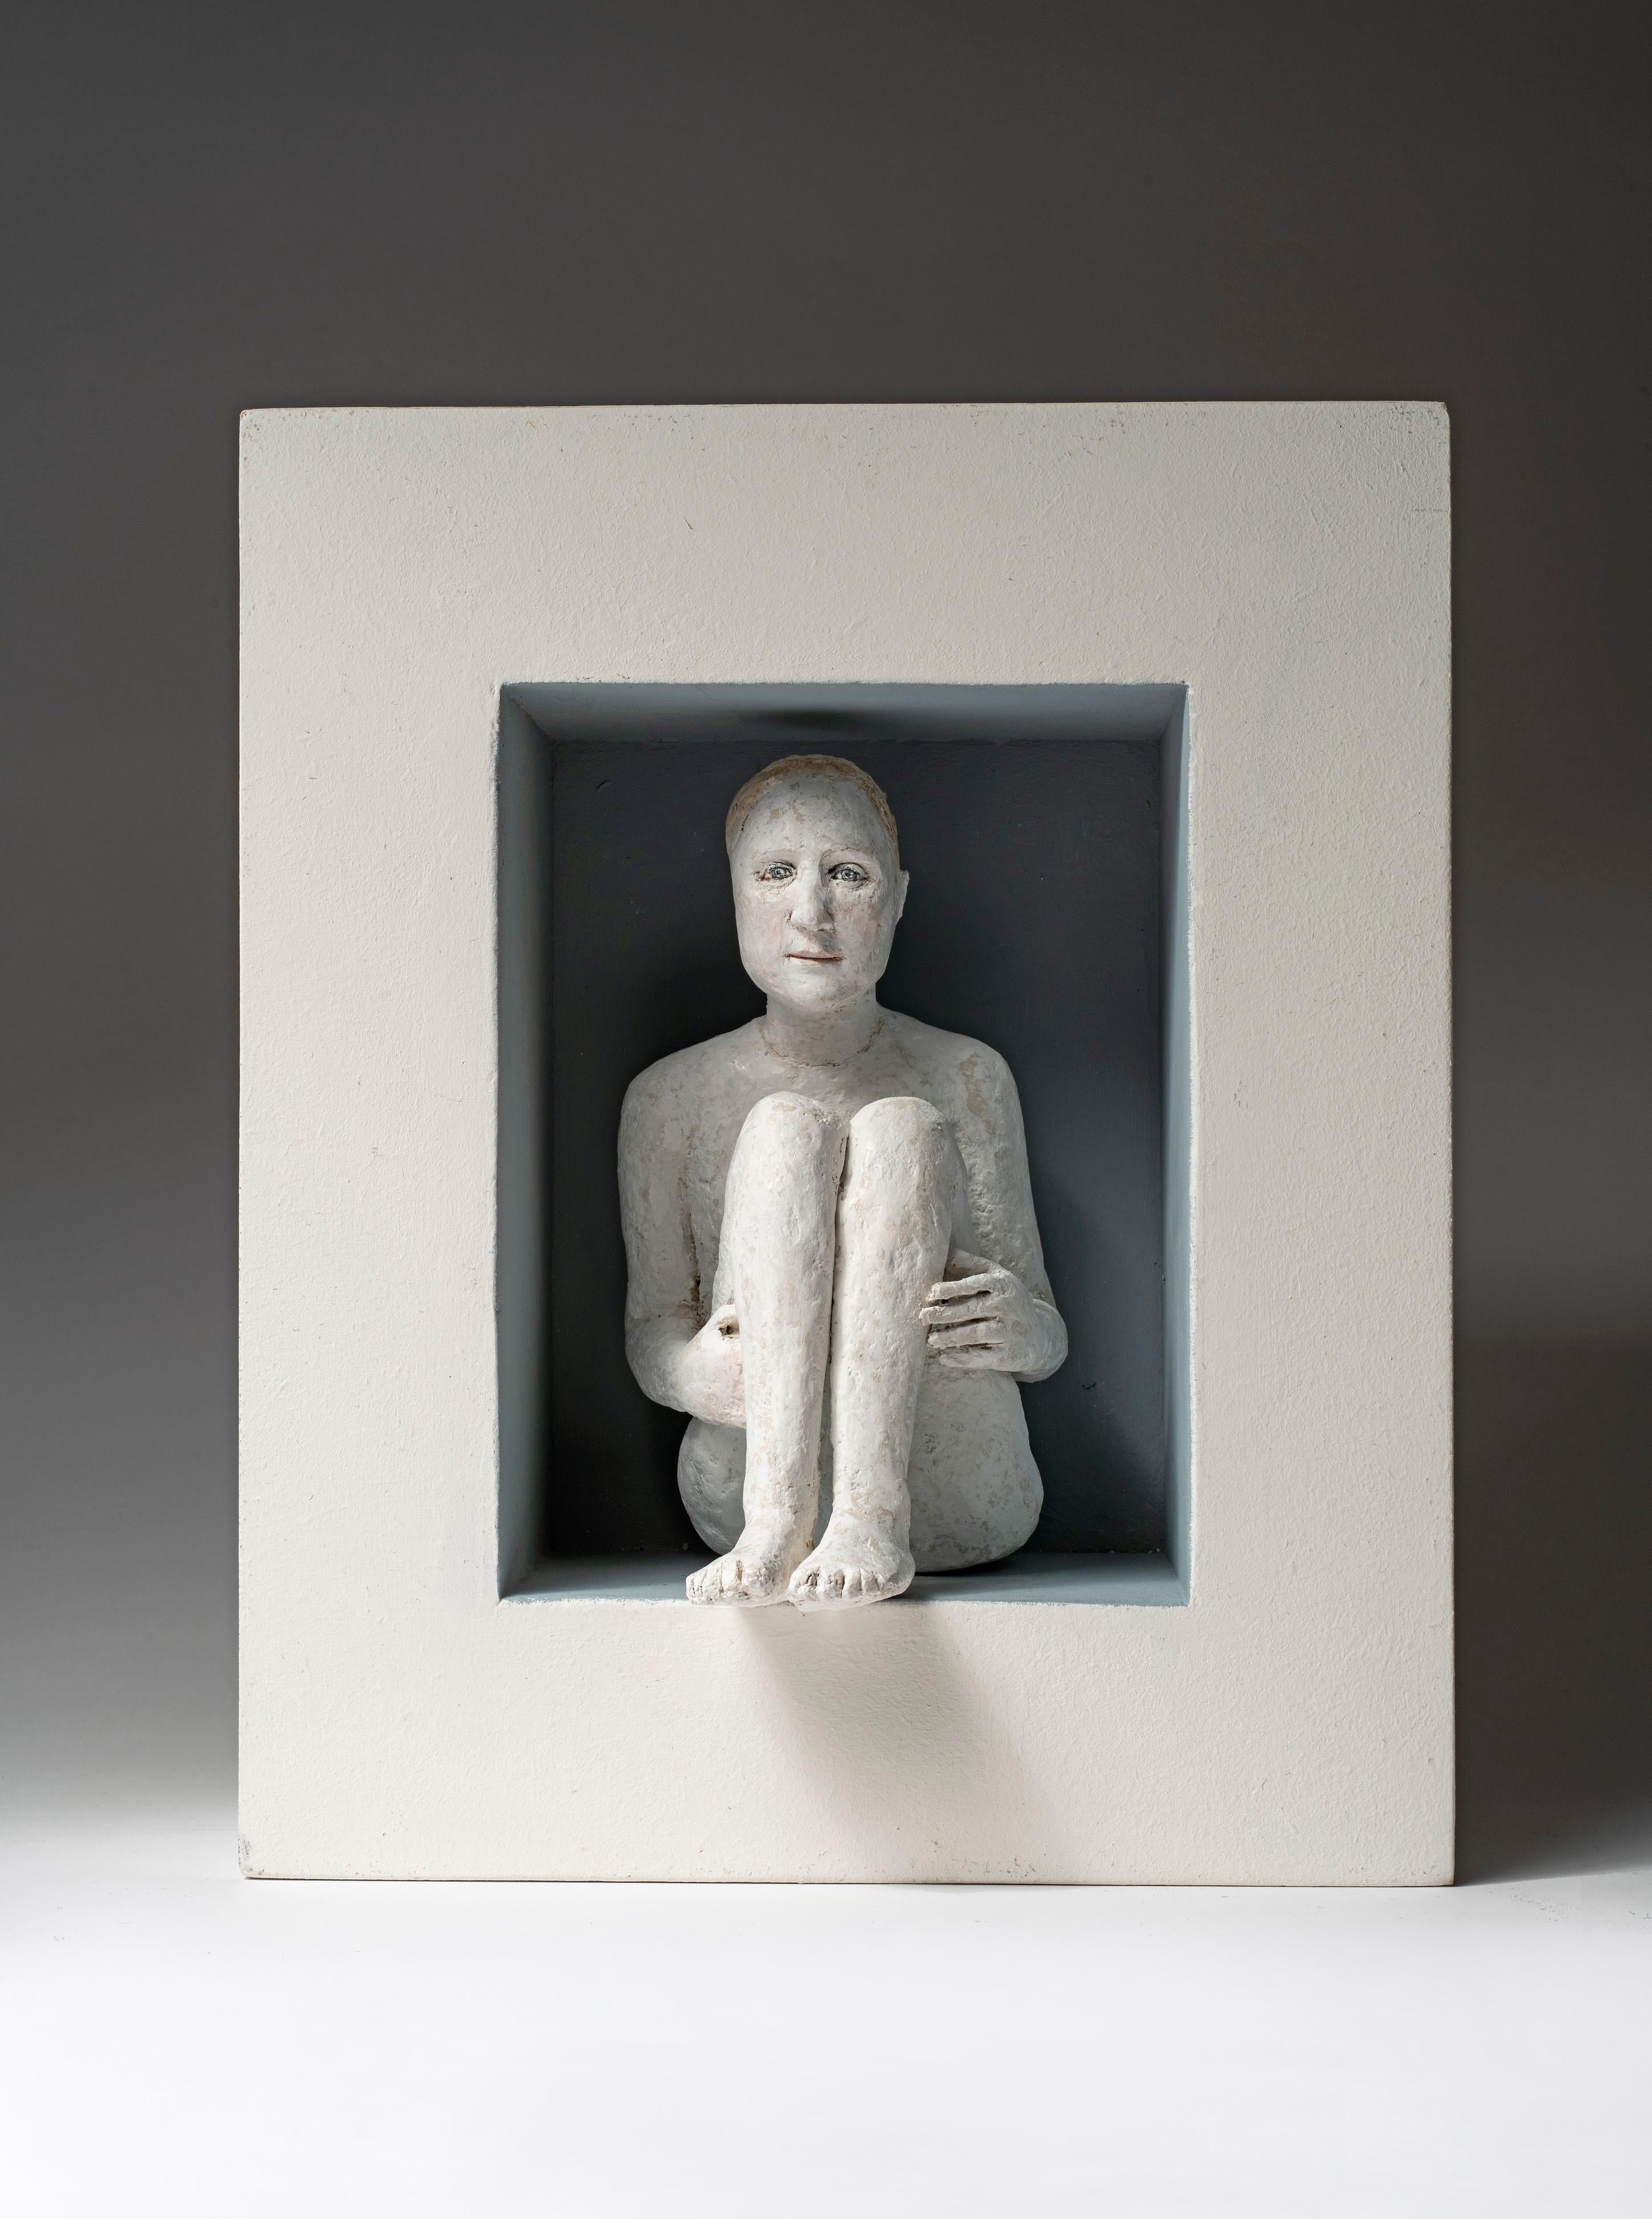 Agnes Baillon Figurative Sculpture - Wall sculpture of seated figure in box frame: Garcon sage dans une boîte